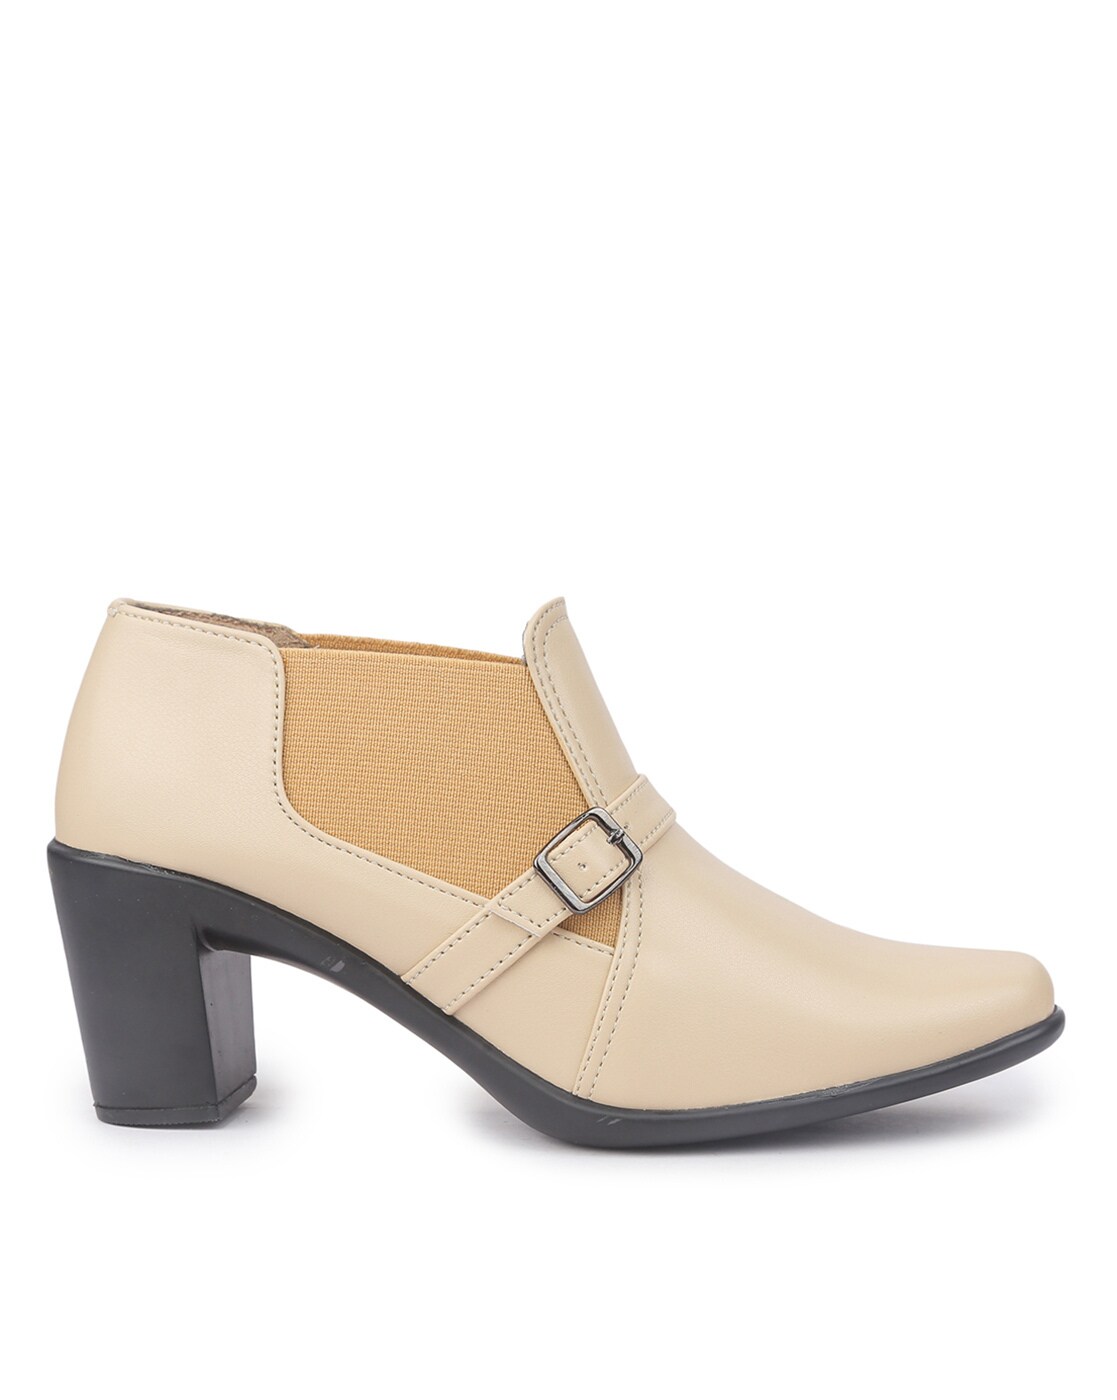 cream heeled boots